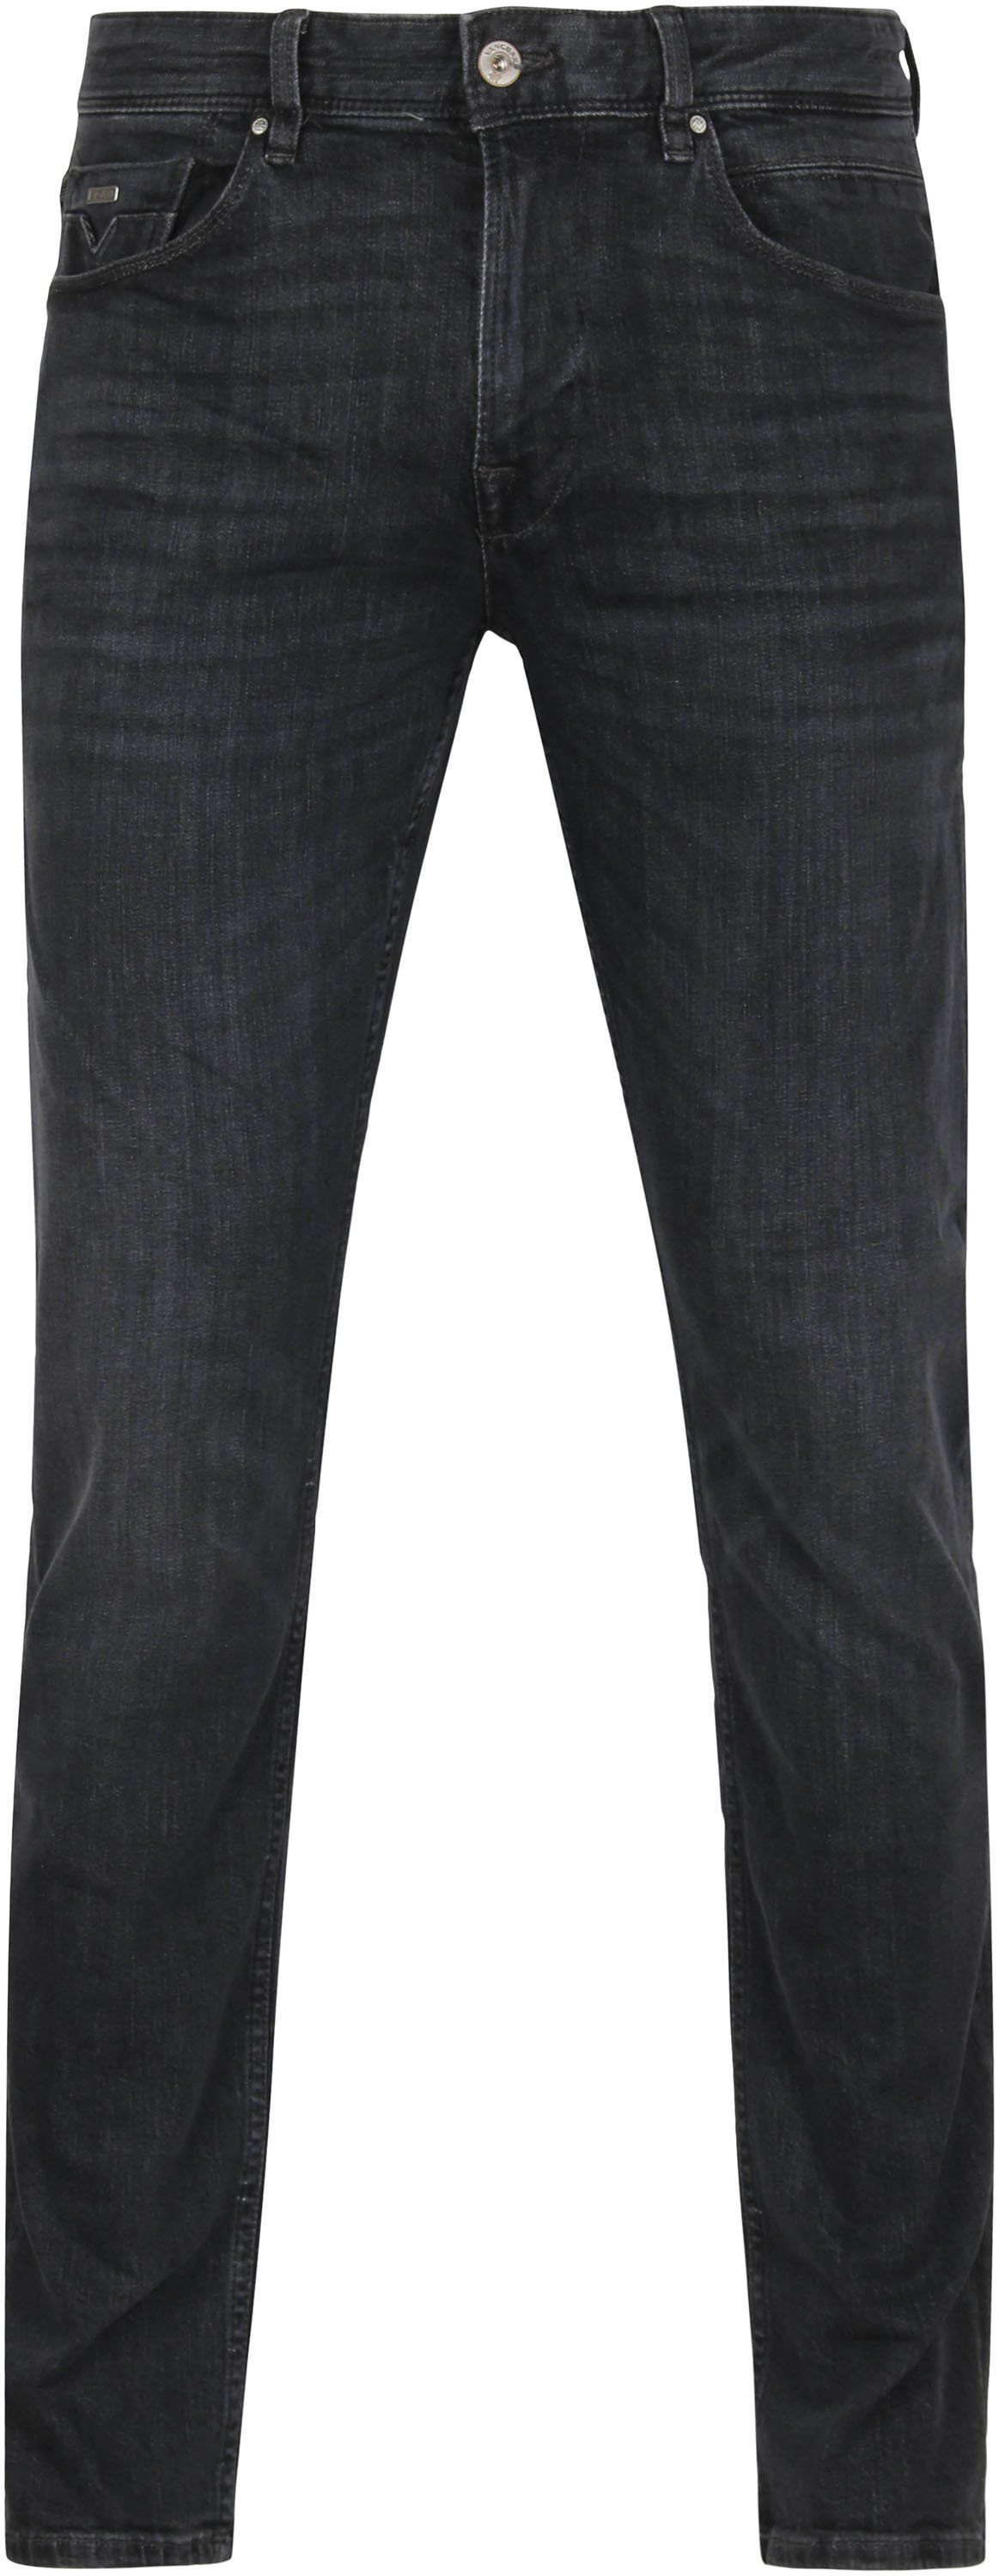 Vanguard Jeans V7 Rider Concrete Grey size W 30